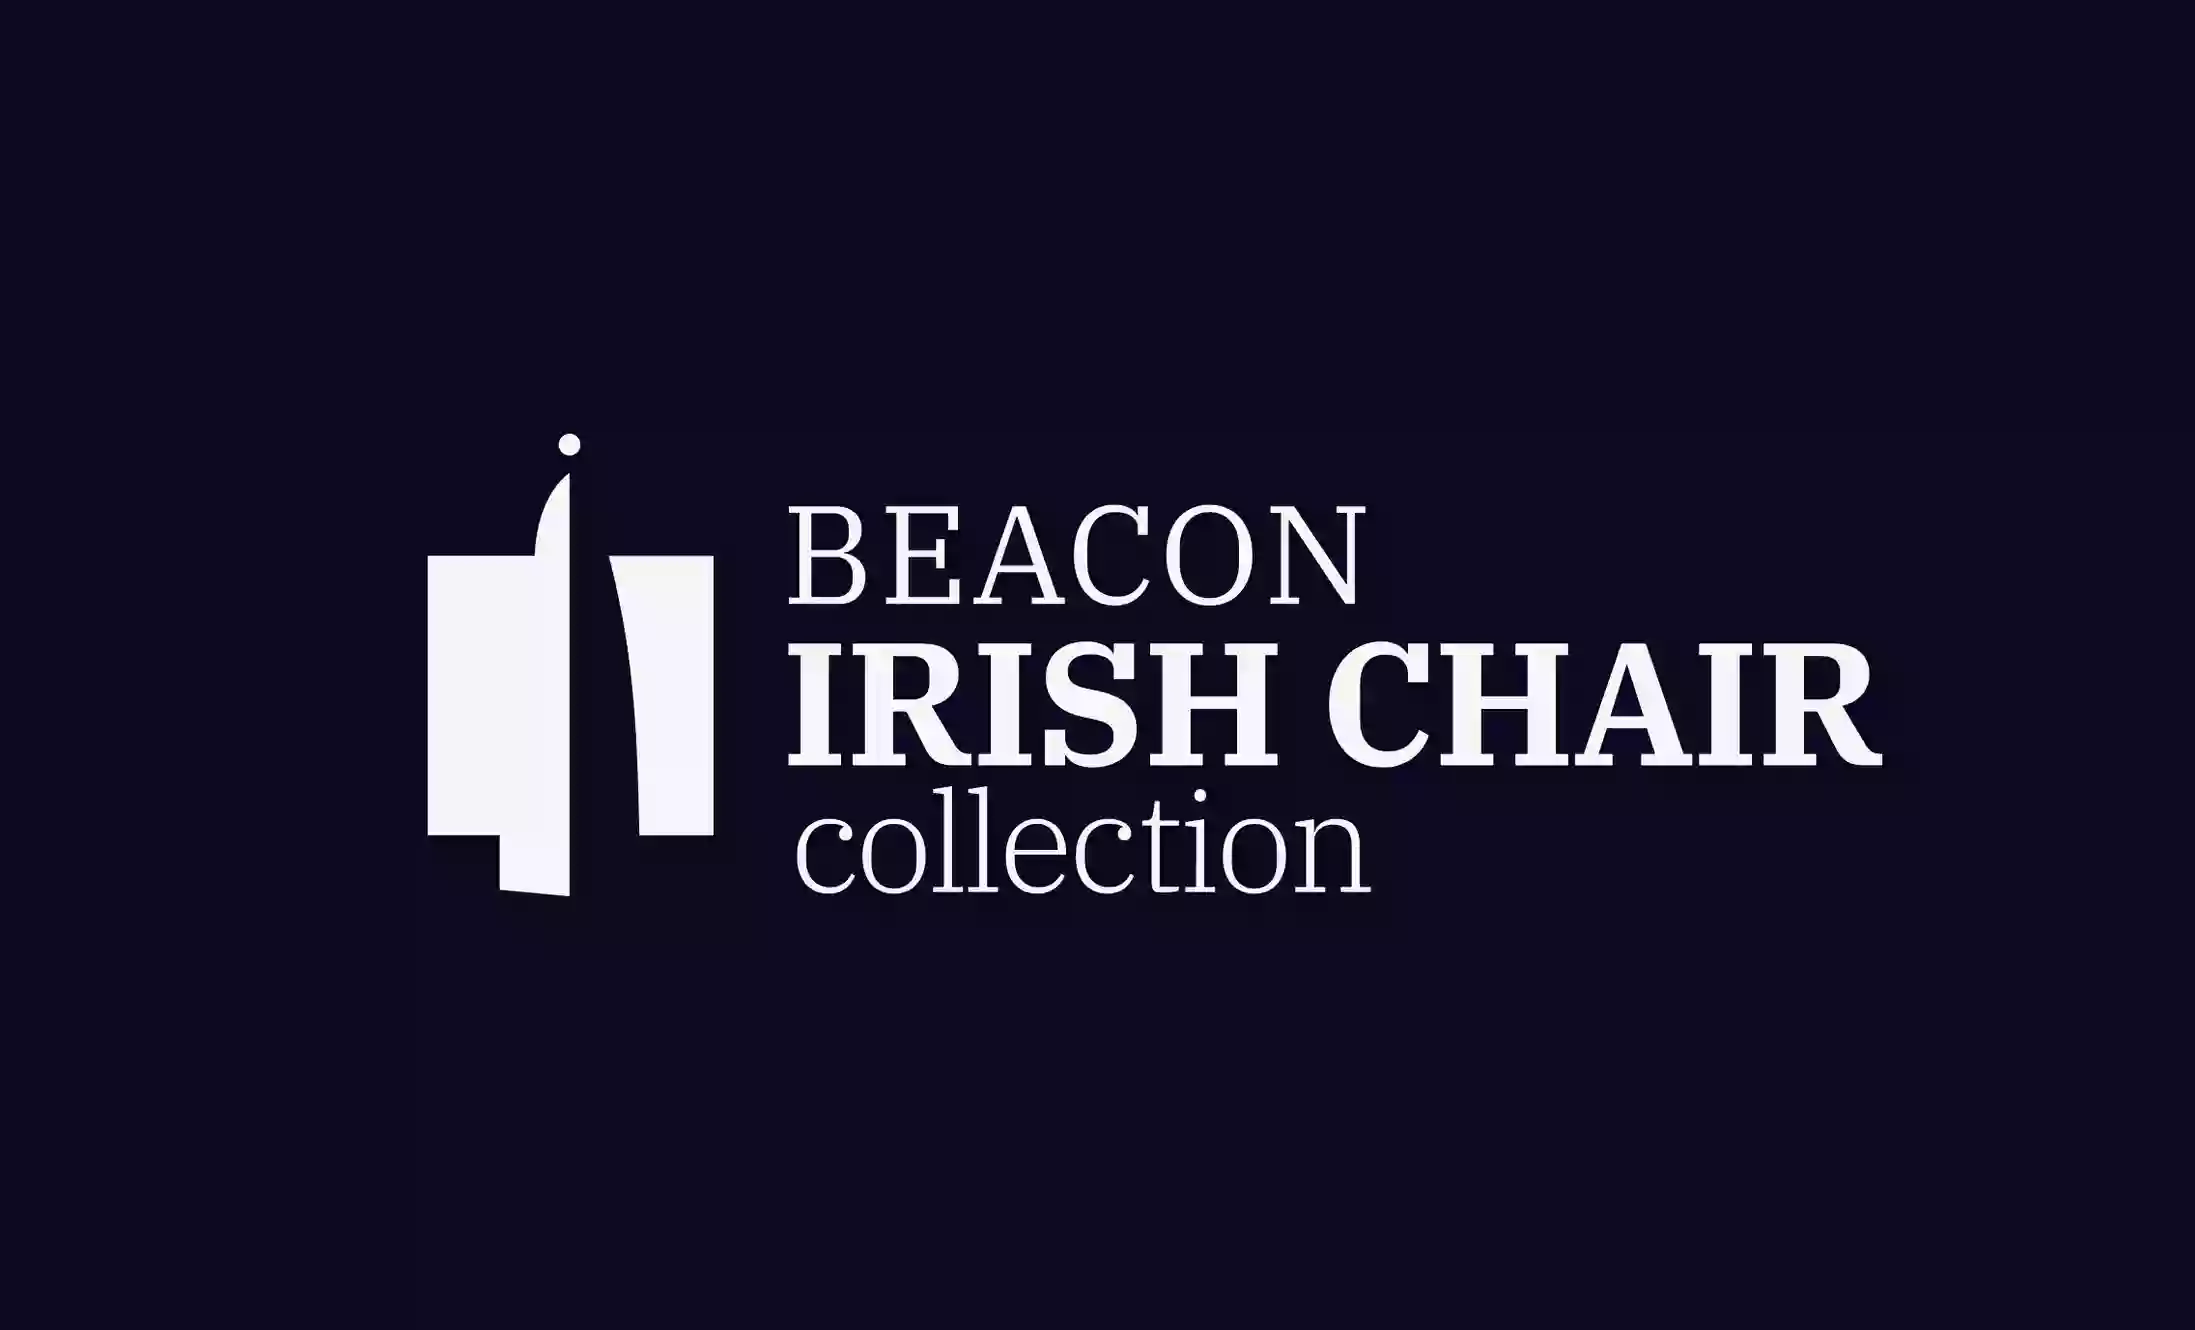 Beacon Irish Chairs Collection